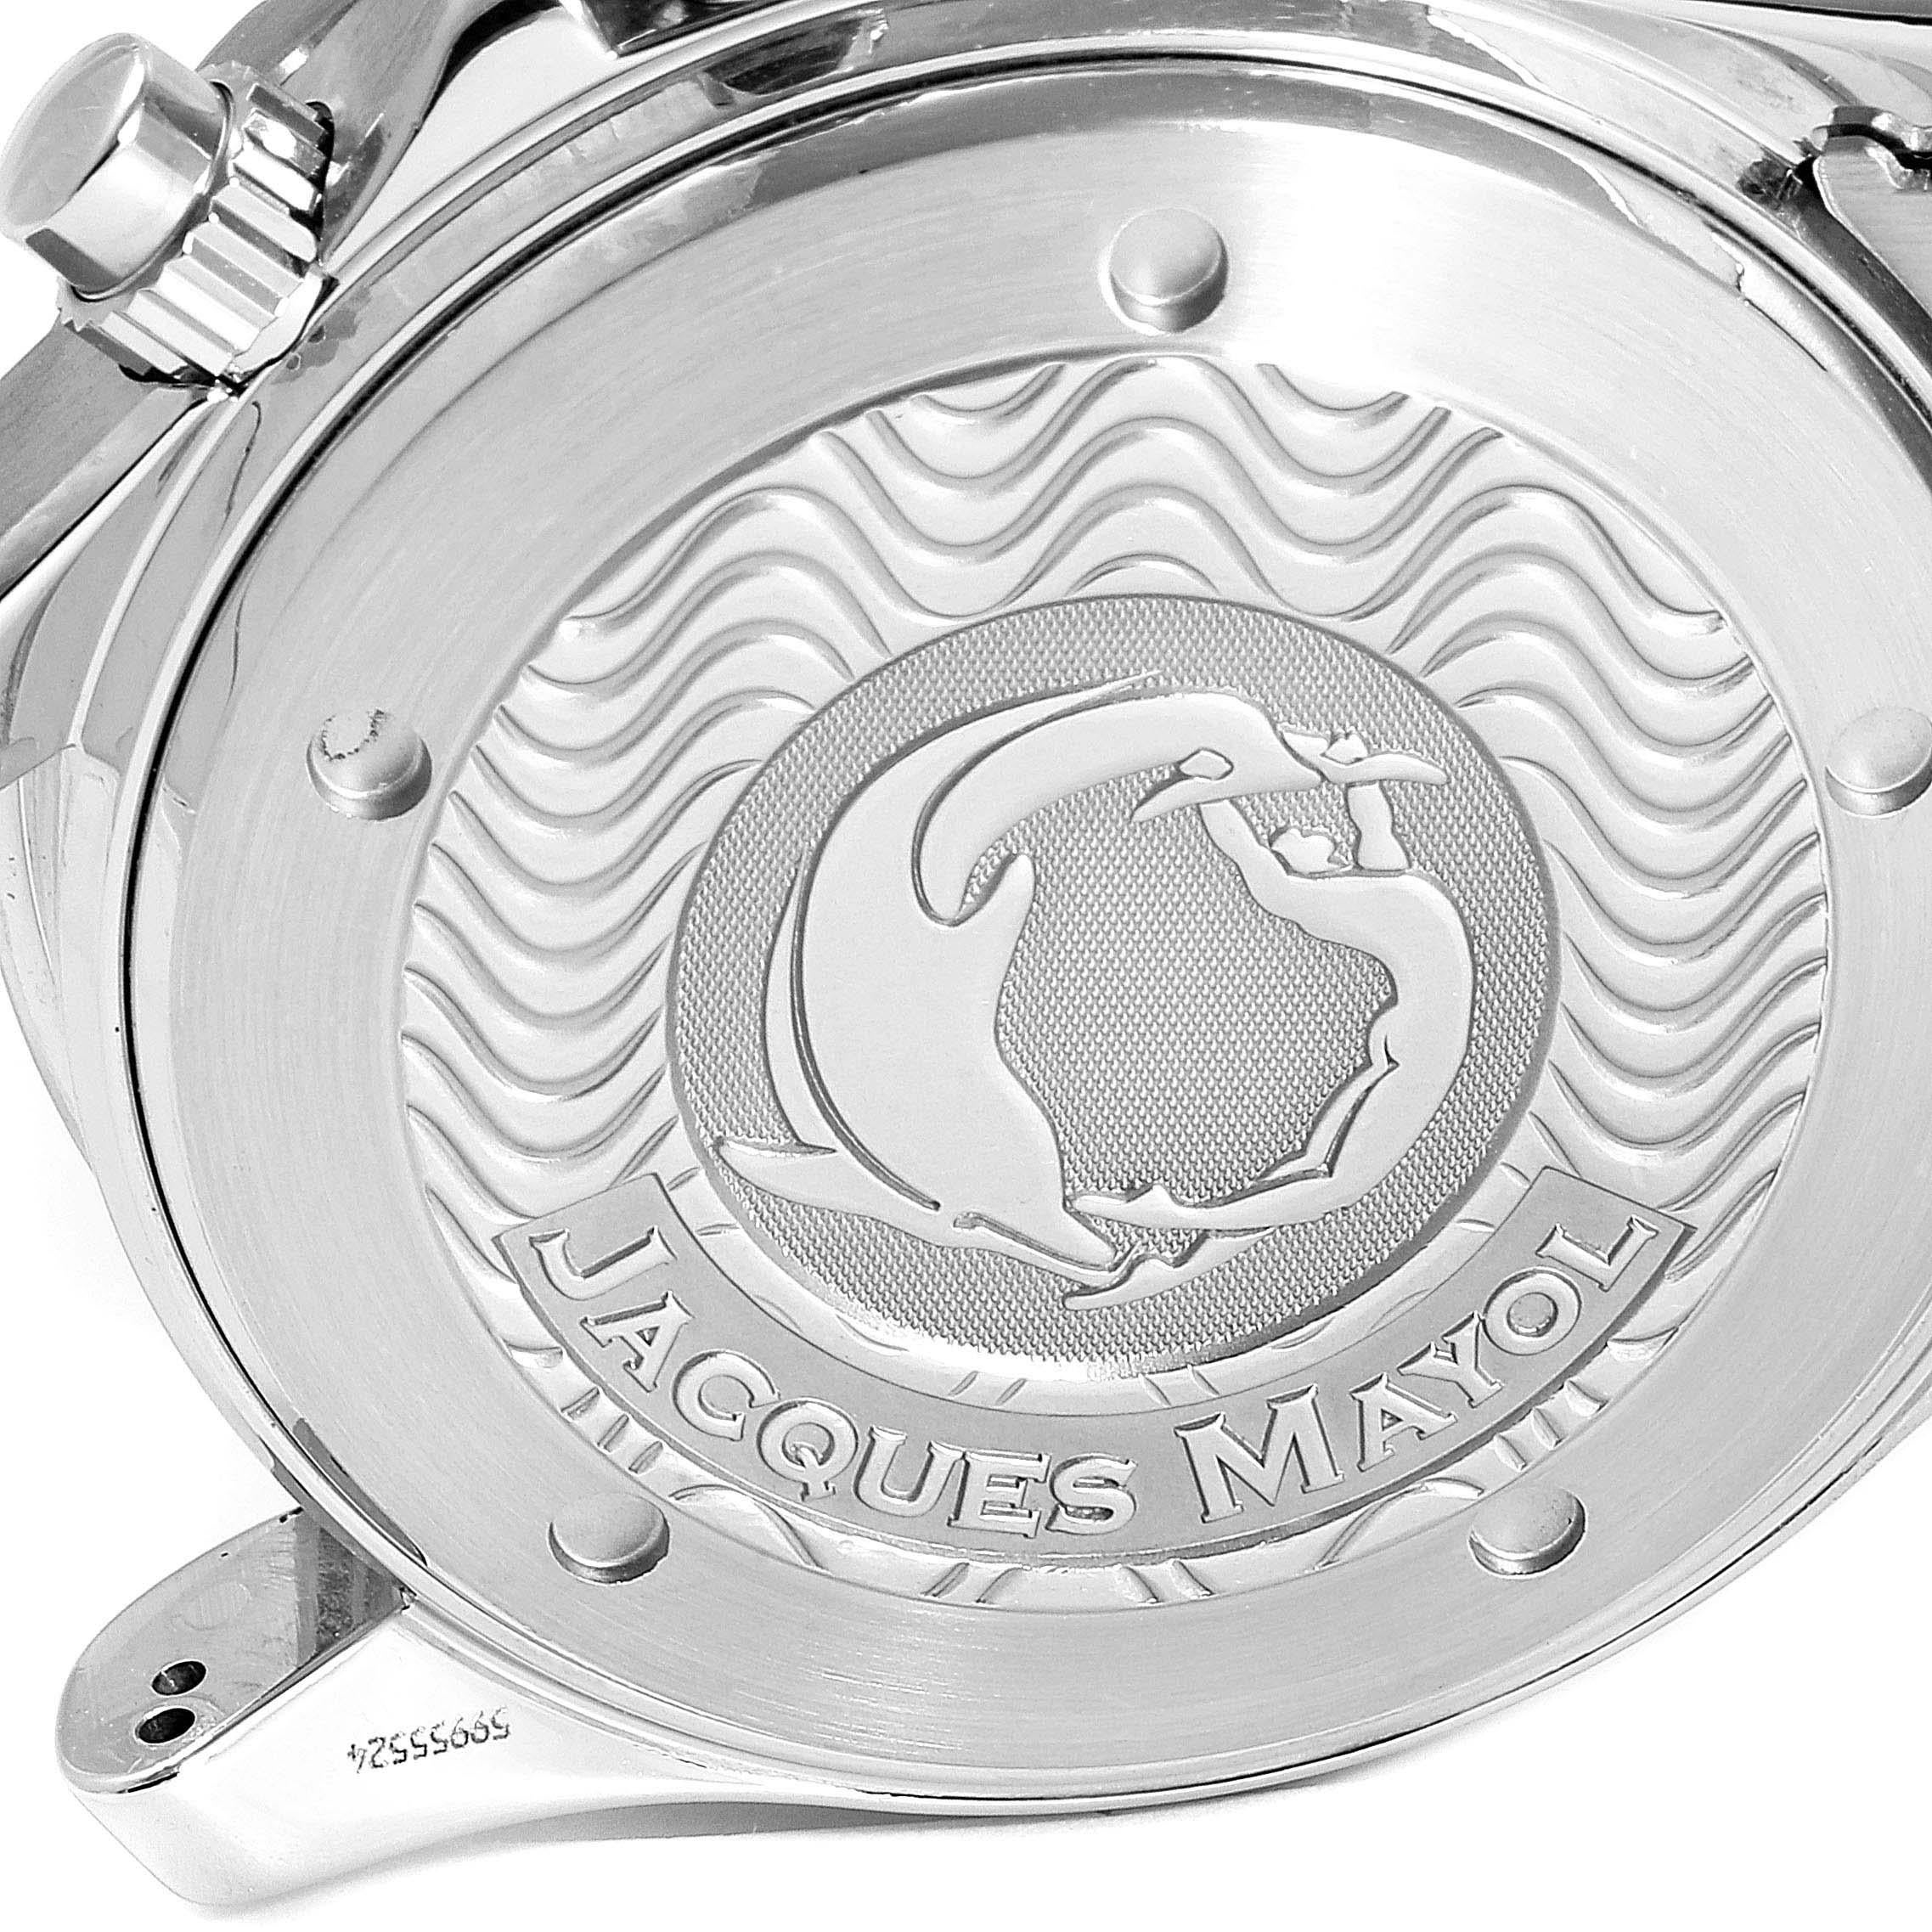 Omega Seamaster Apnea Jacques Mayol Silver Dial Men's Watch 2595.30.00 4